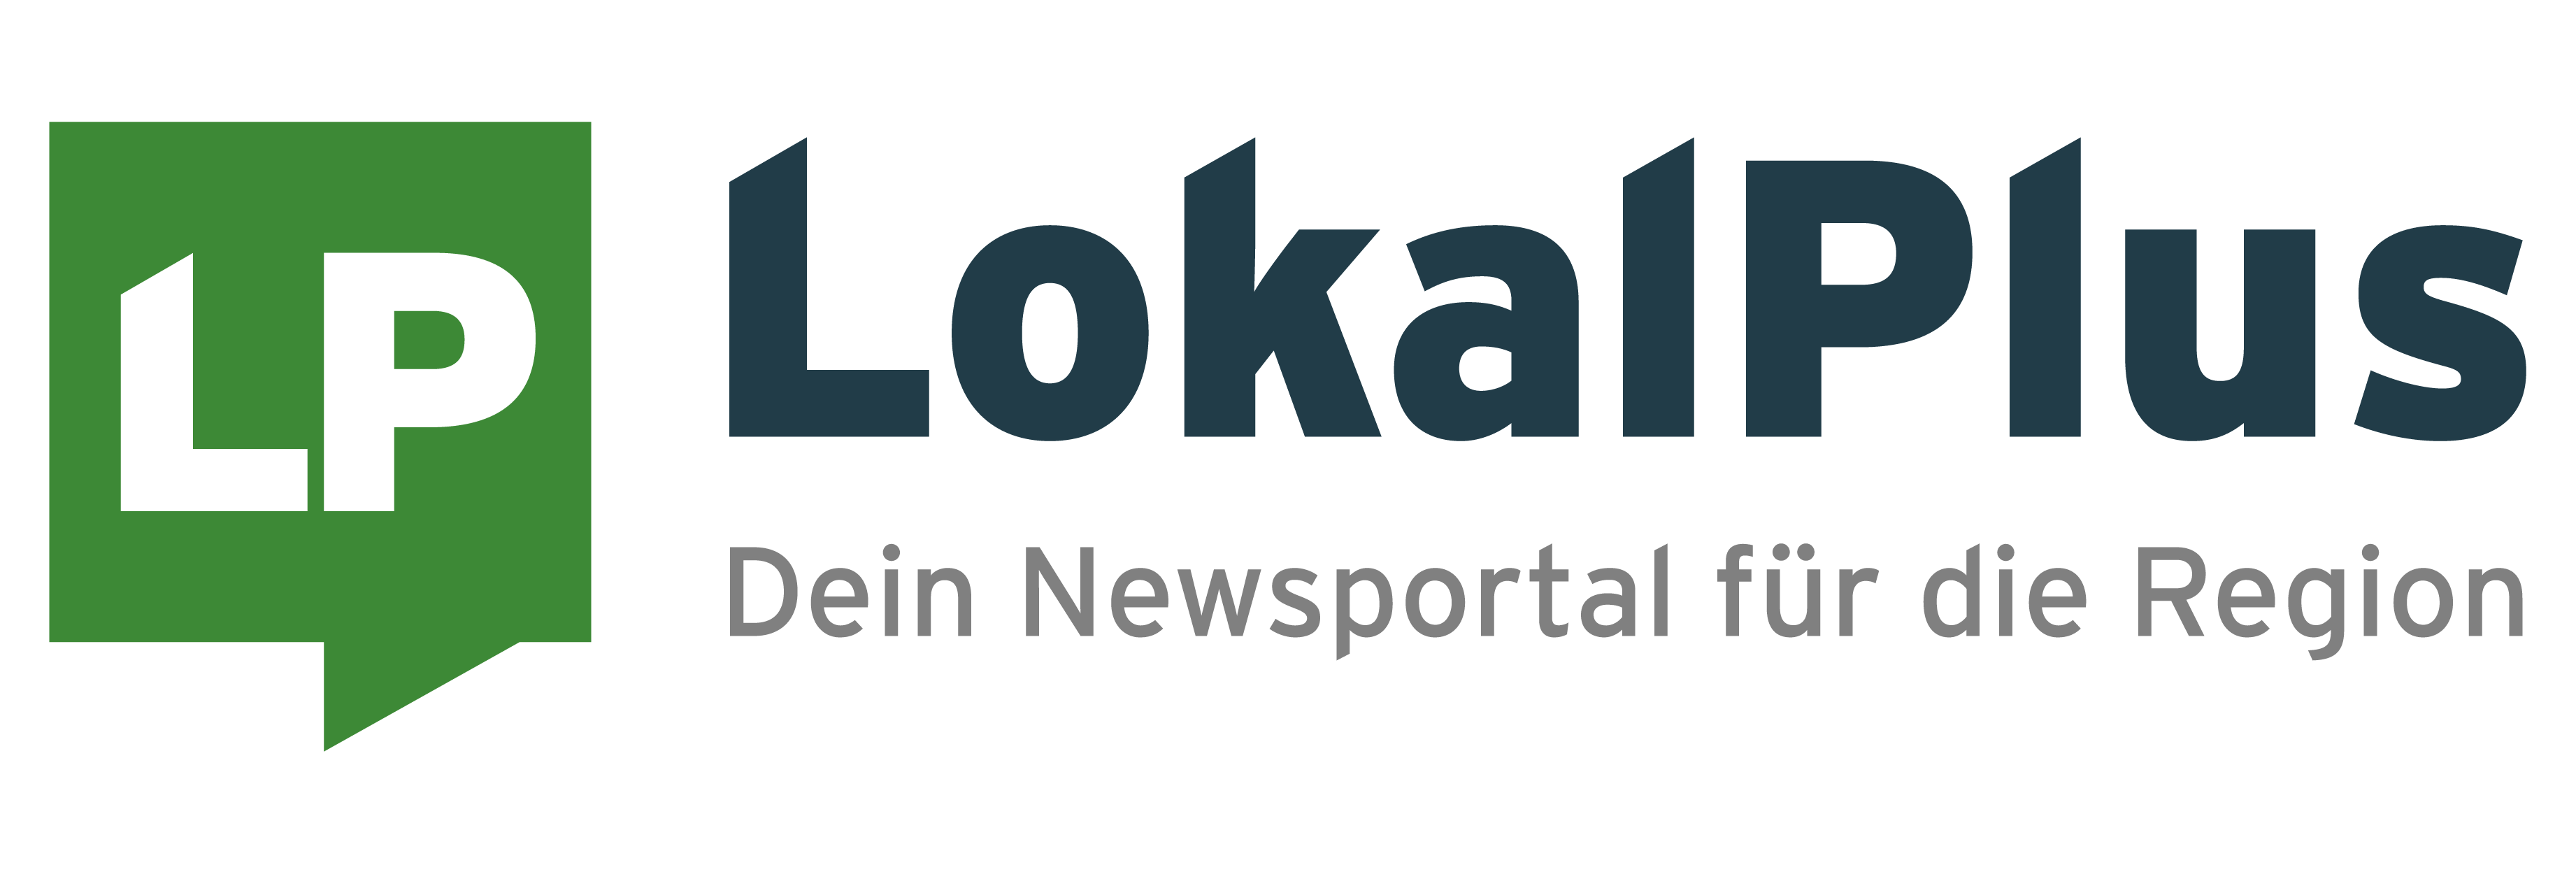 lokalplus_logo_neu_bildmarke_links